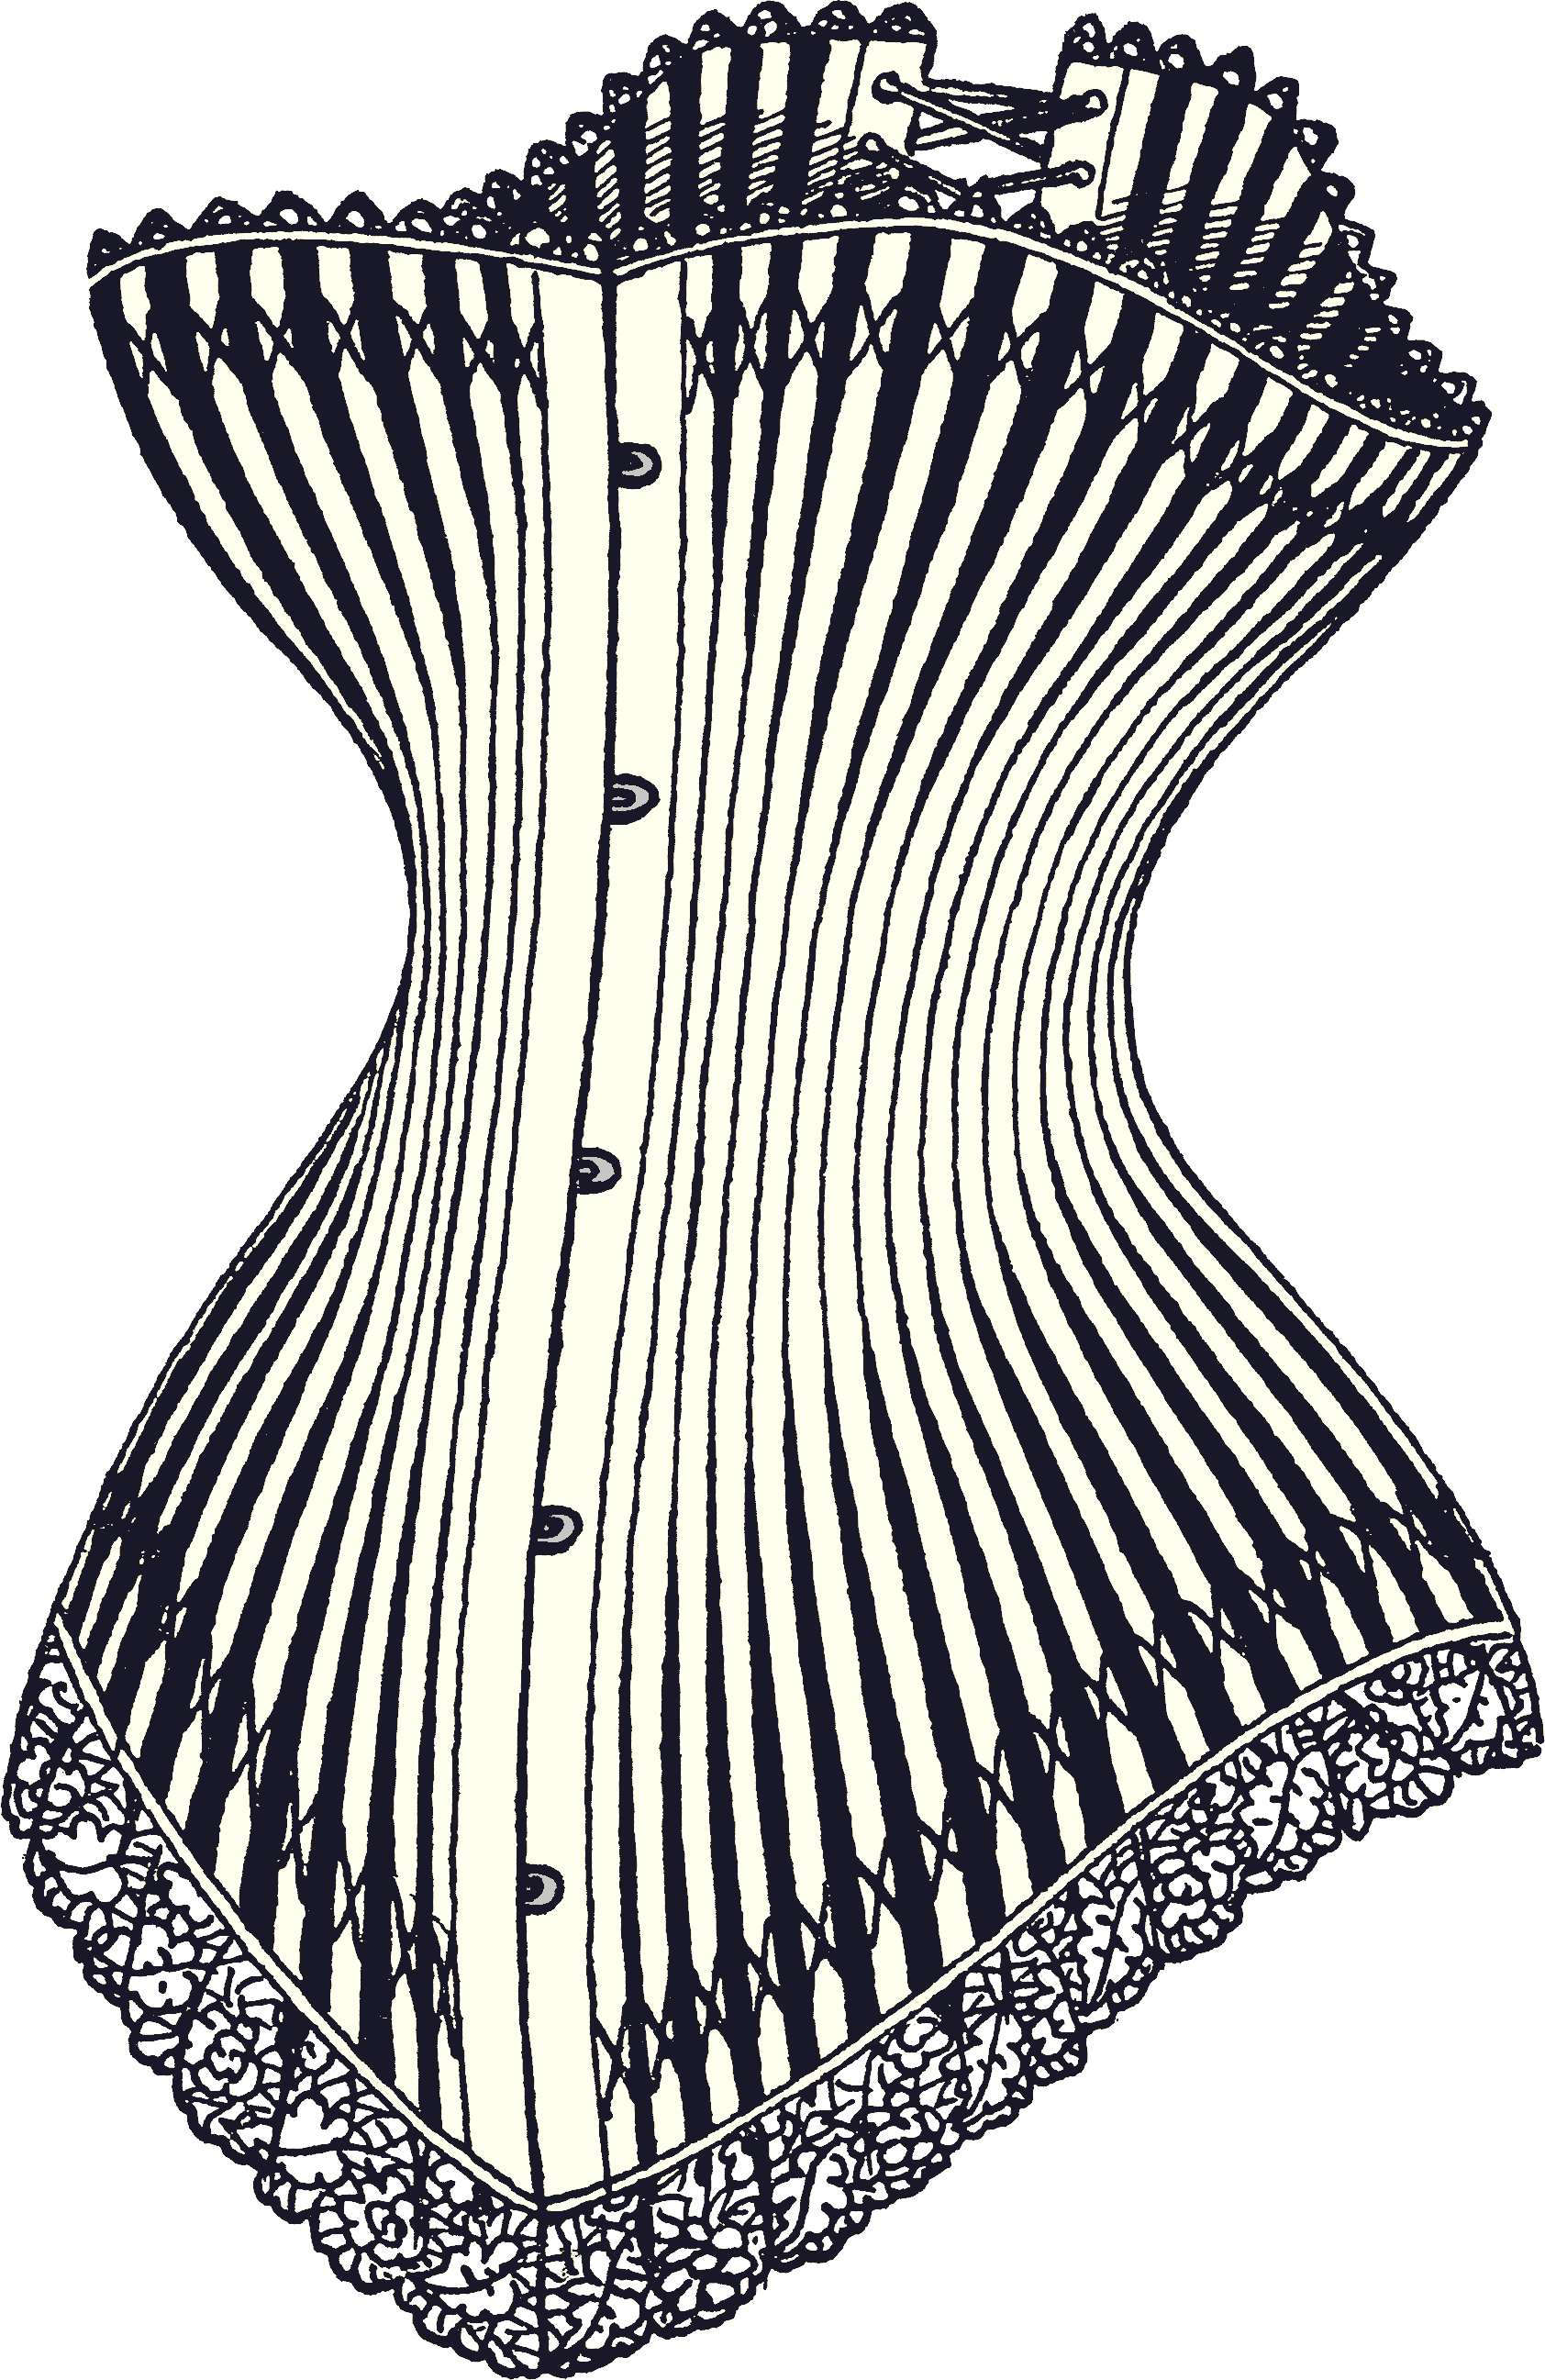 tighten that corset